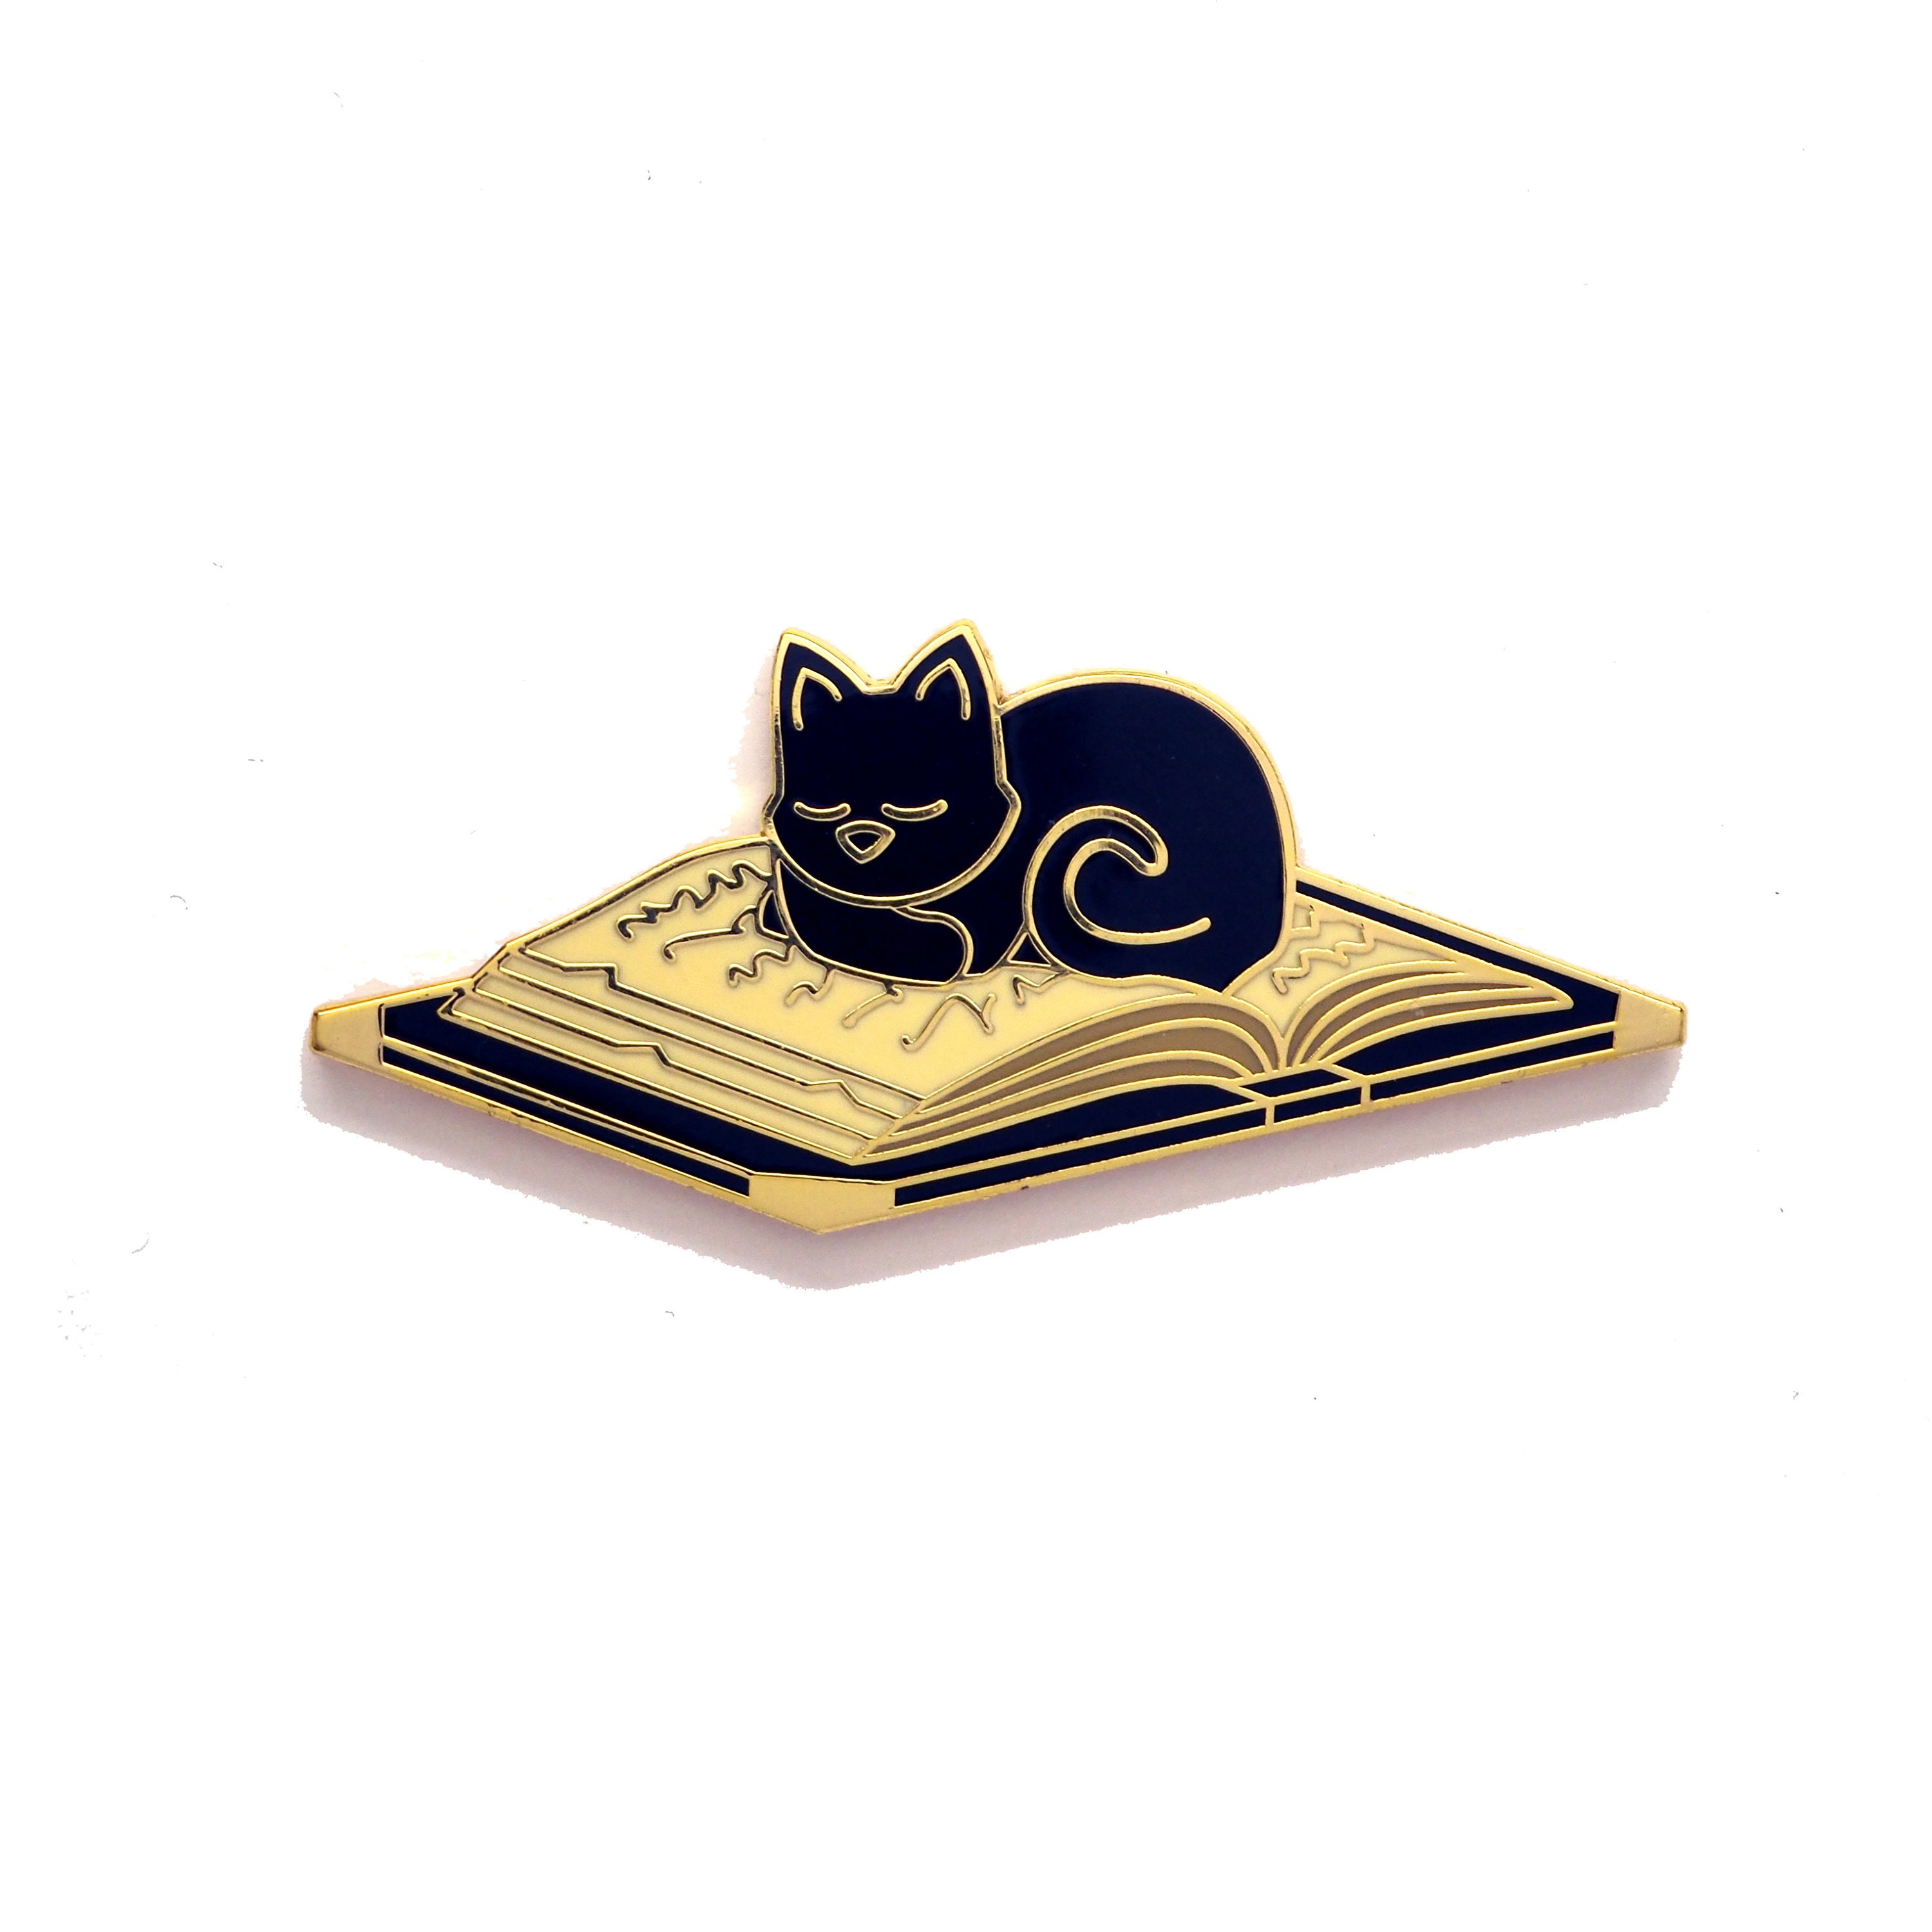 Pin on Cat furniture